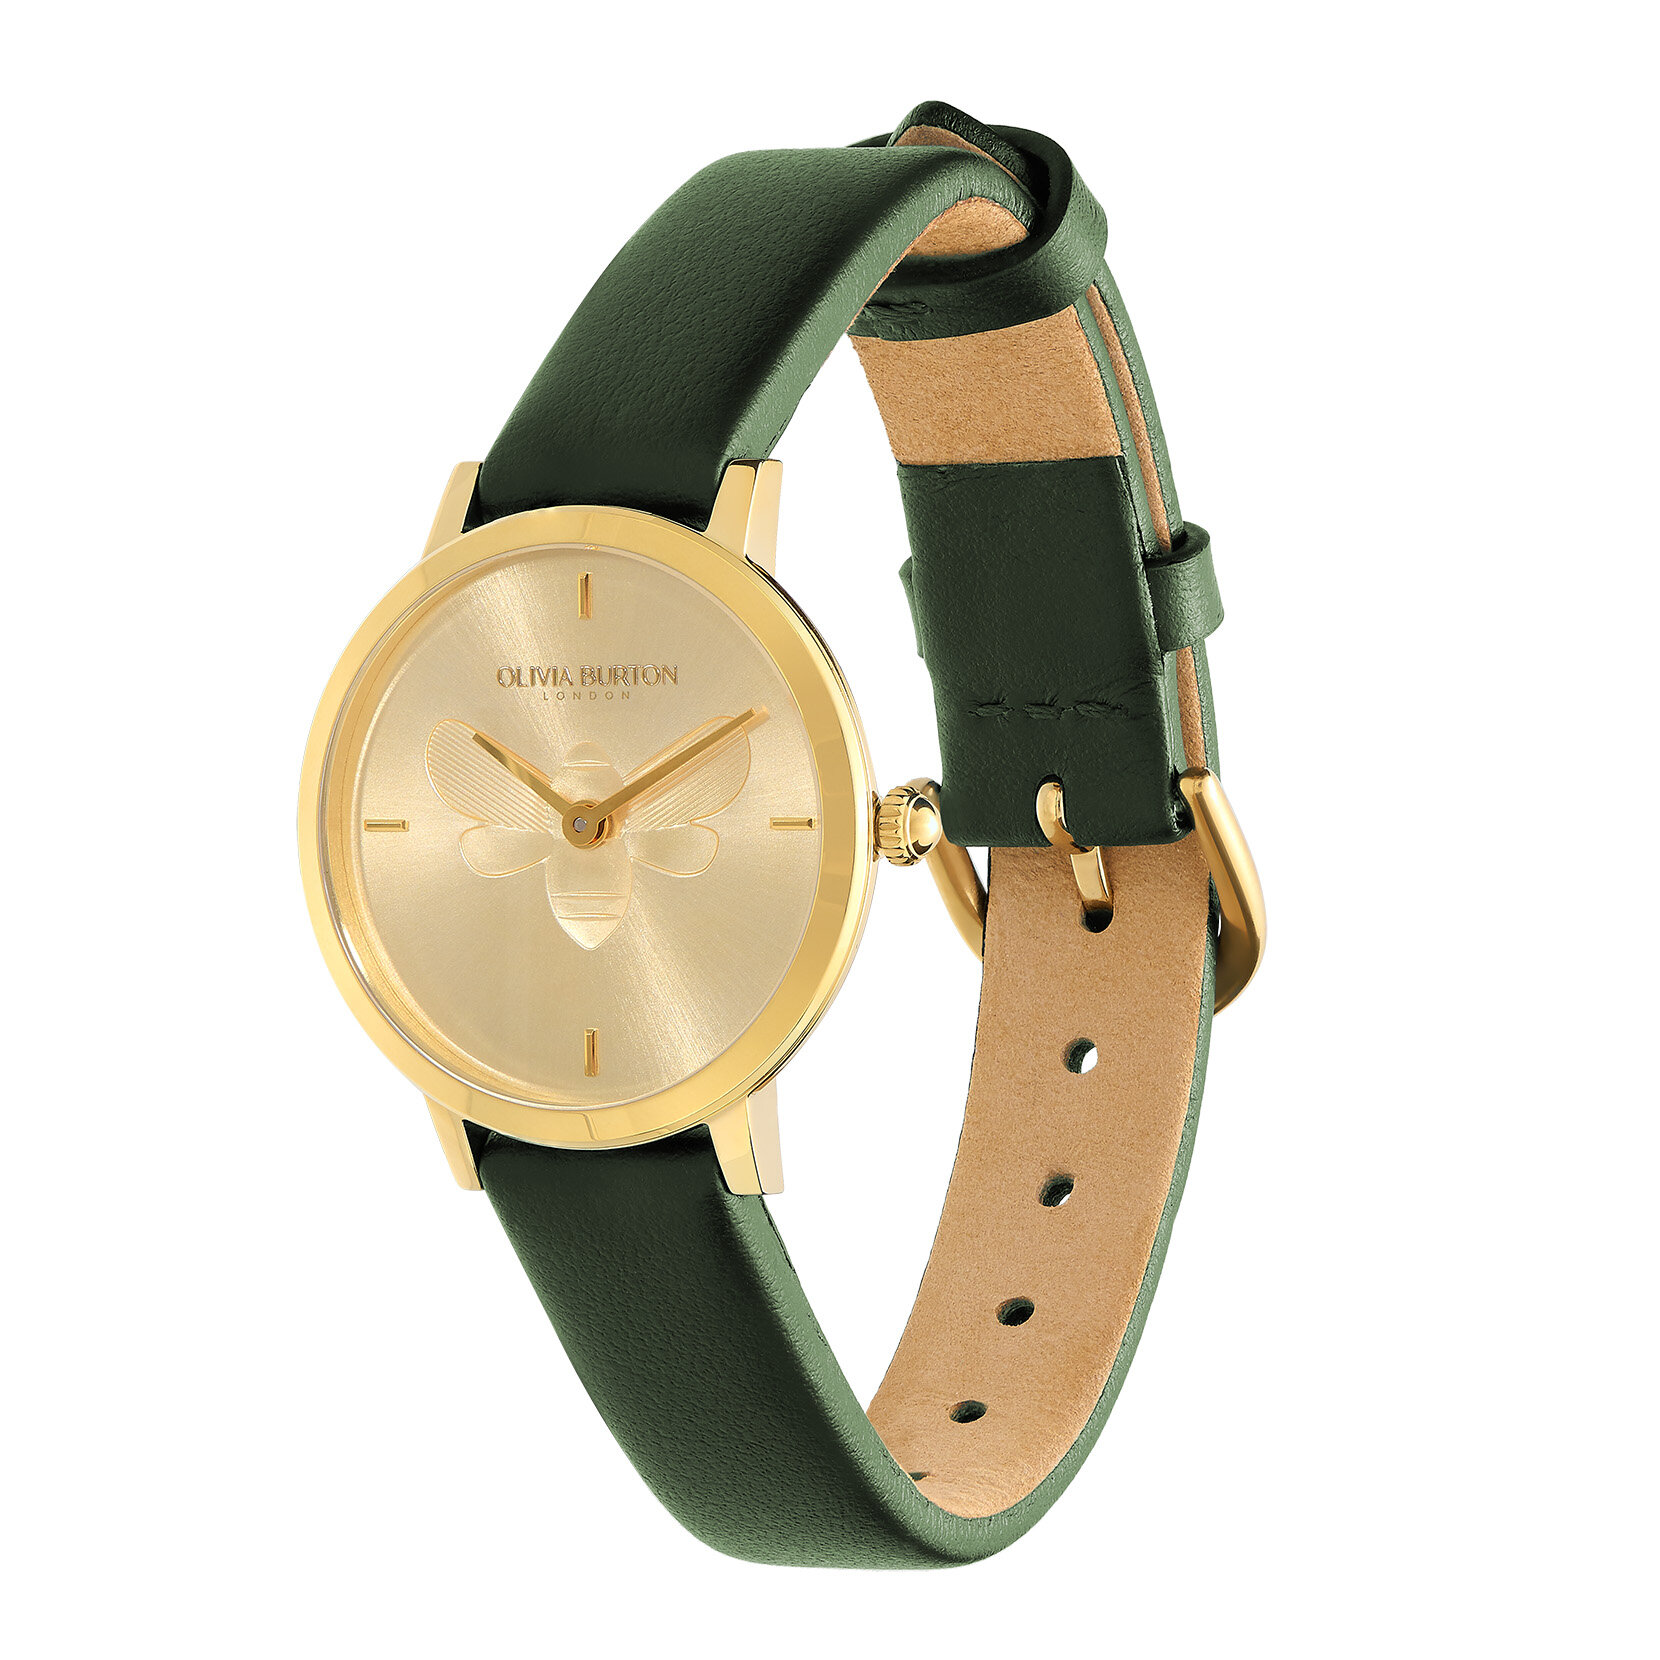 28mm Bee Ultra Slim Gold & Green Leather Strap Watch & Minima Bee Bracelet Gift Set